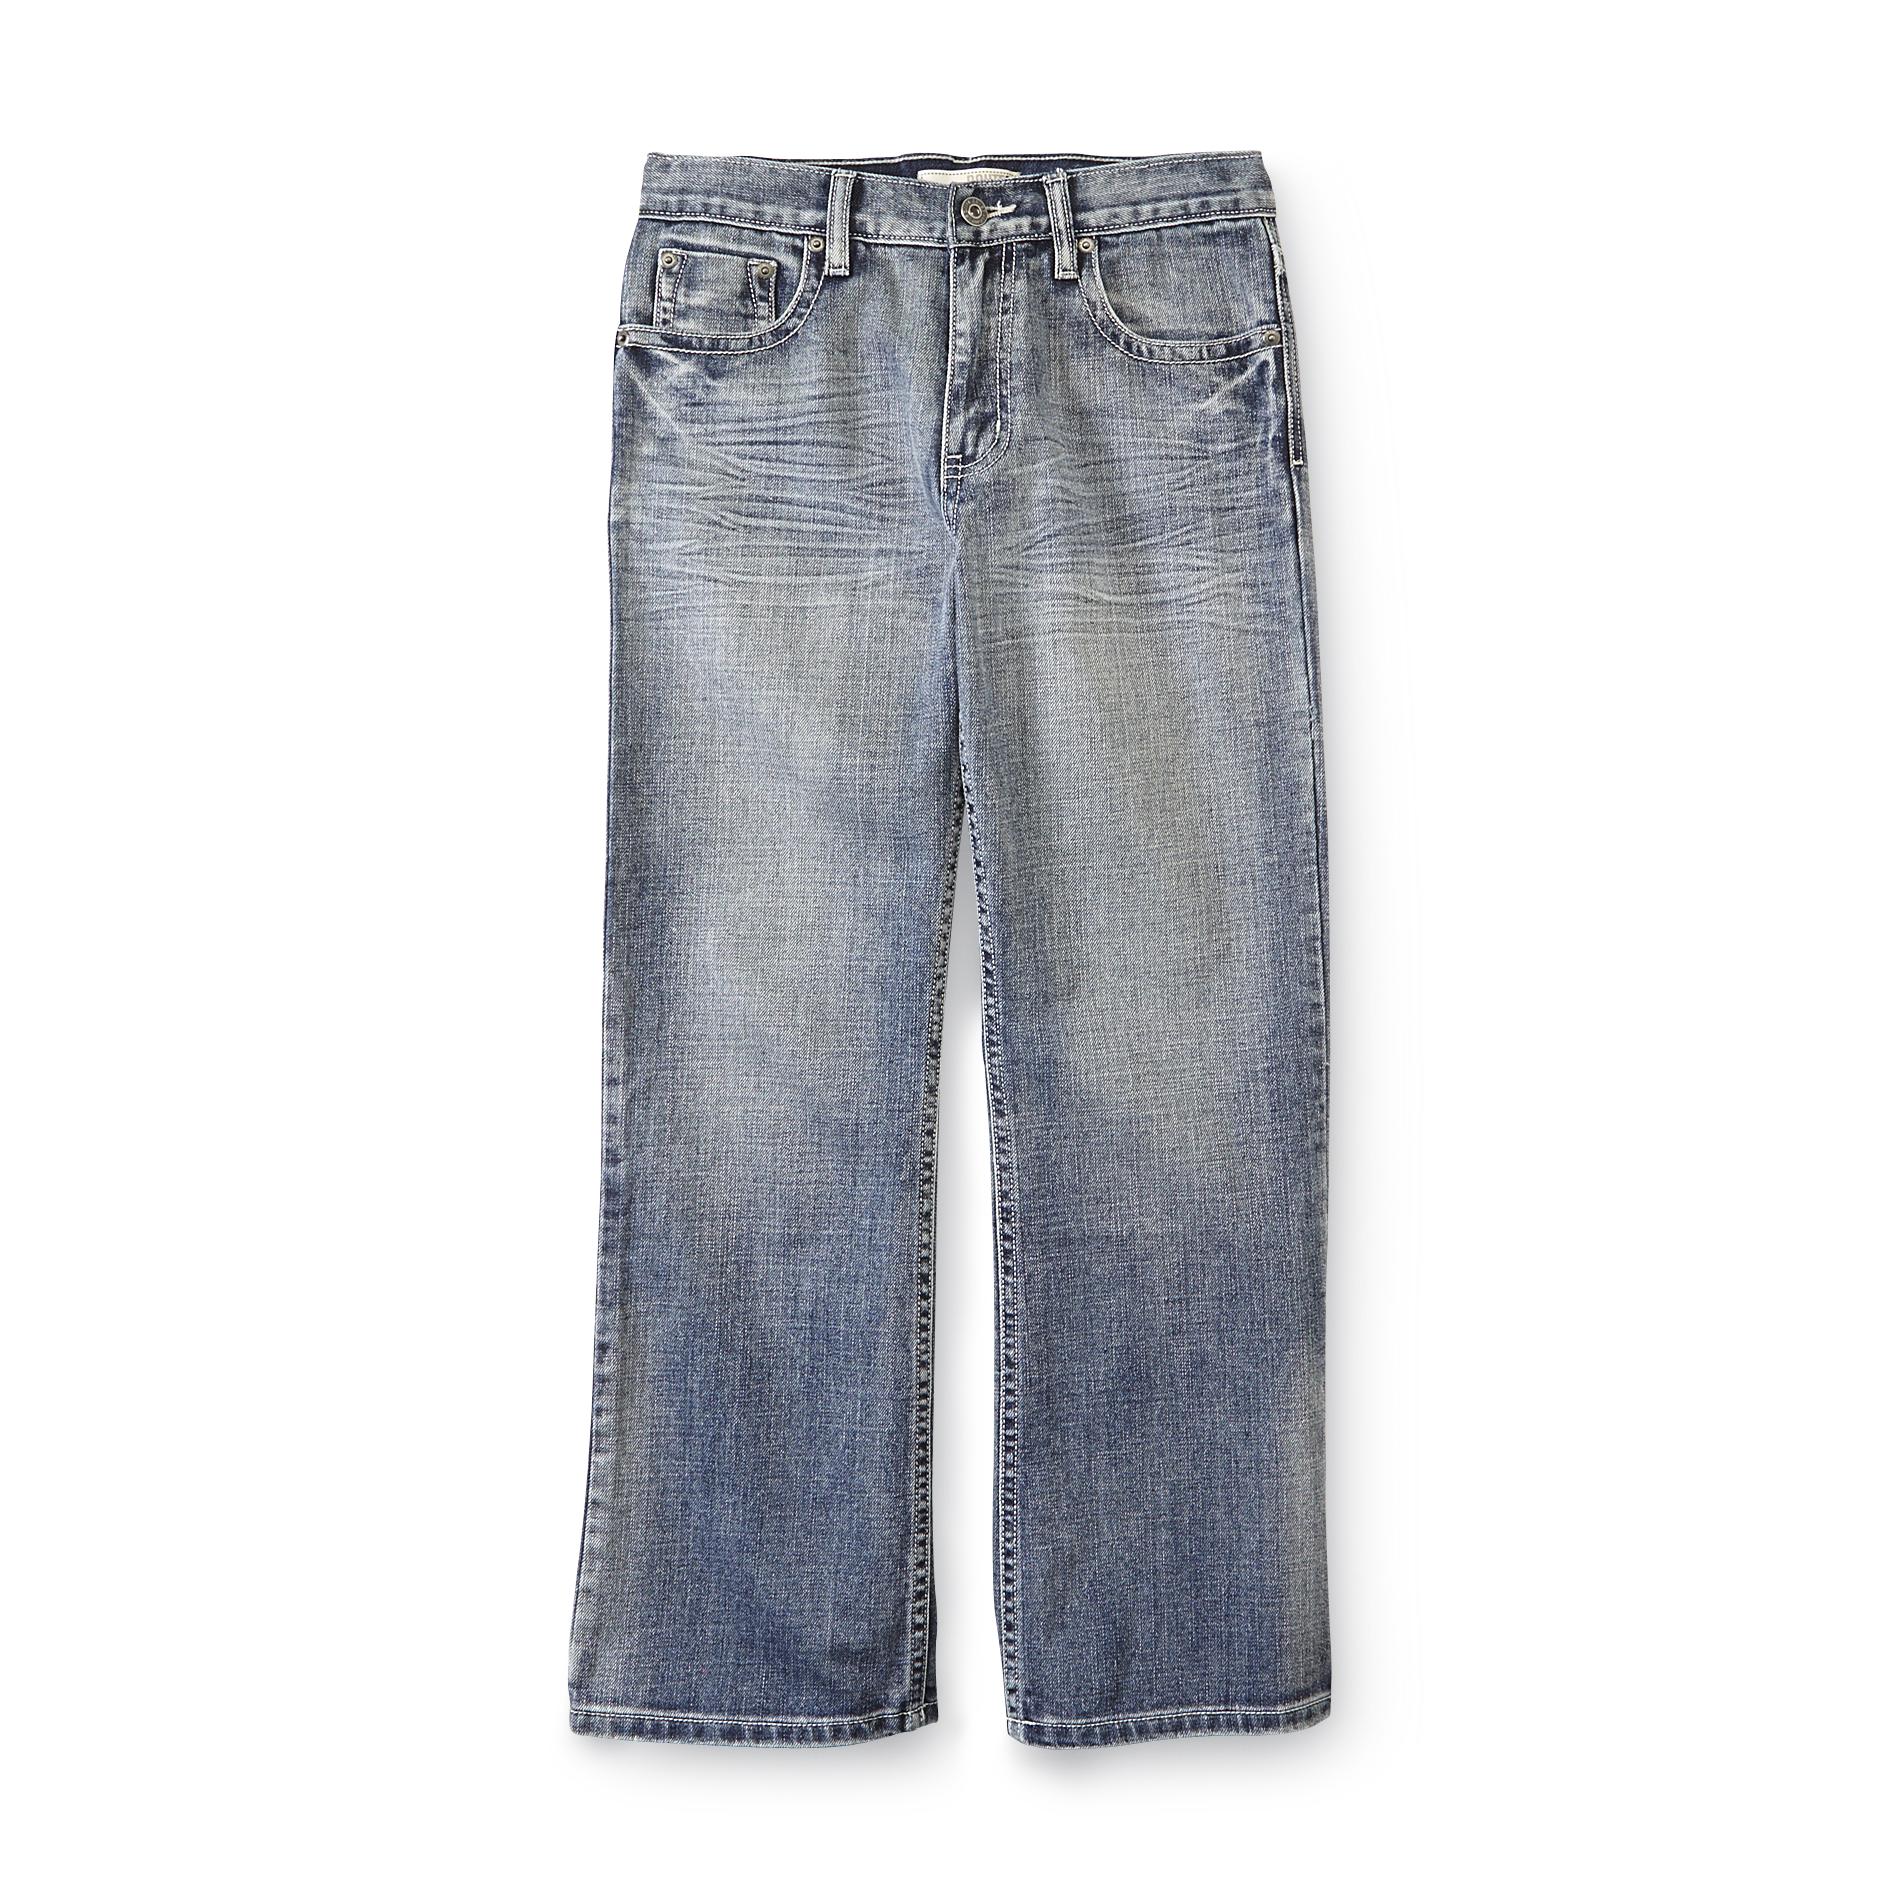 Route 66 Boy's Bootcut Jeans - Light Wash